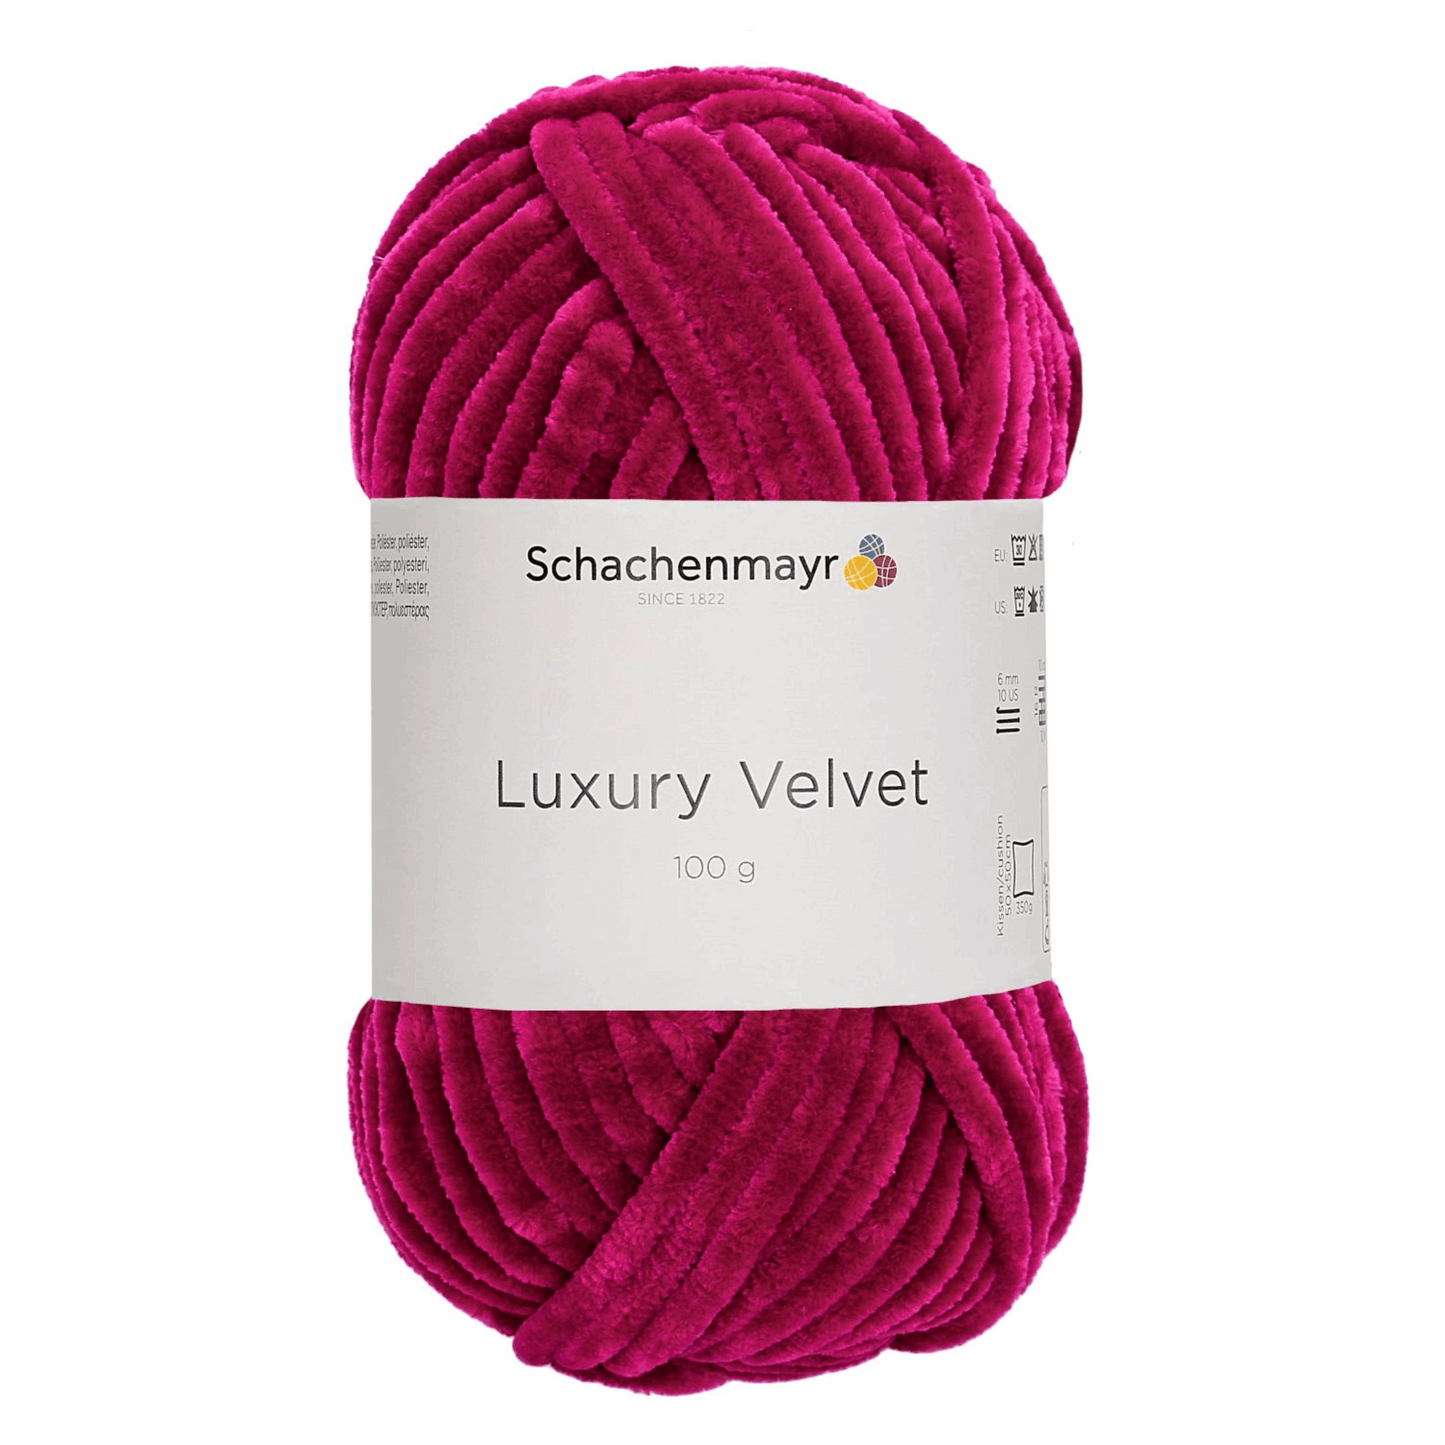 Schachenmayr Luxury Velvet 100g, 90592, color cherry 30